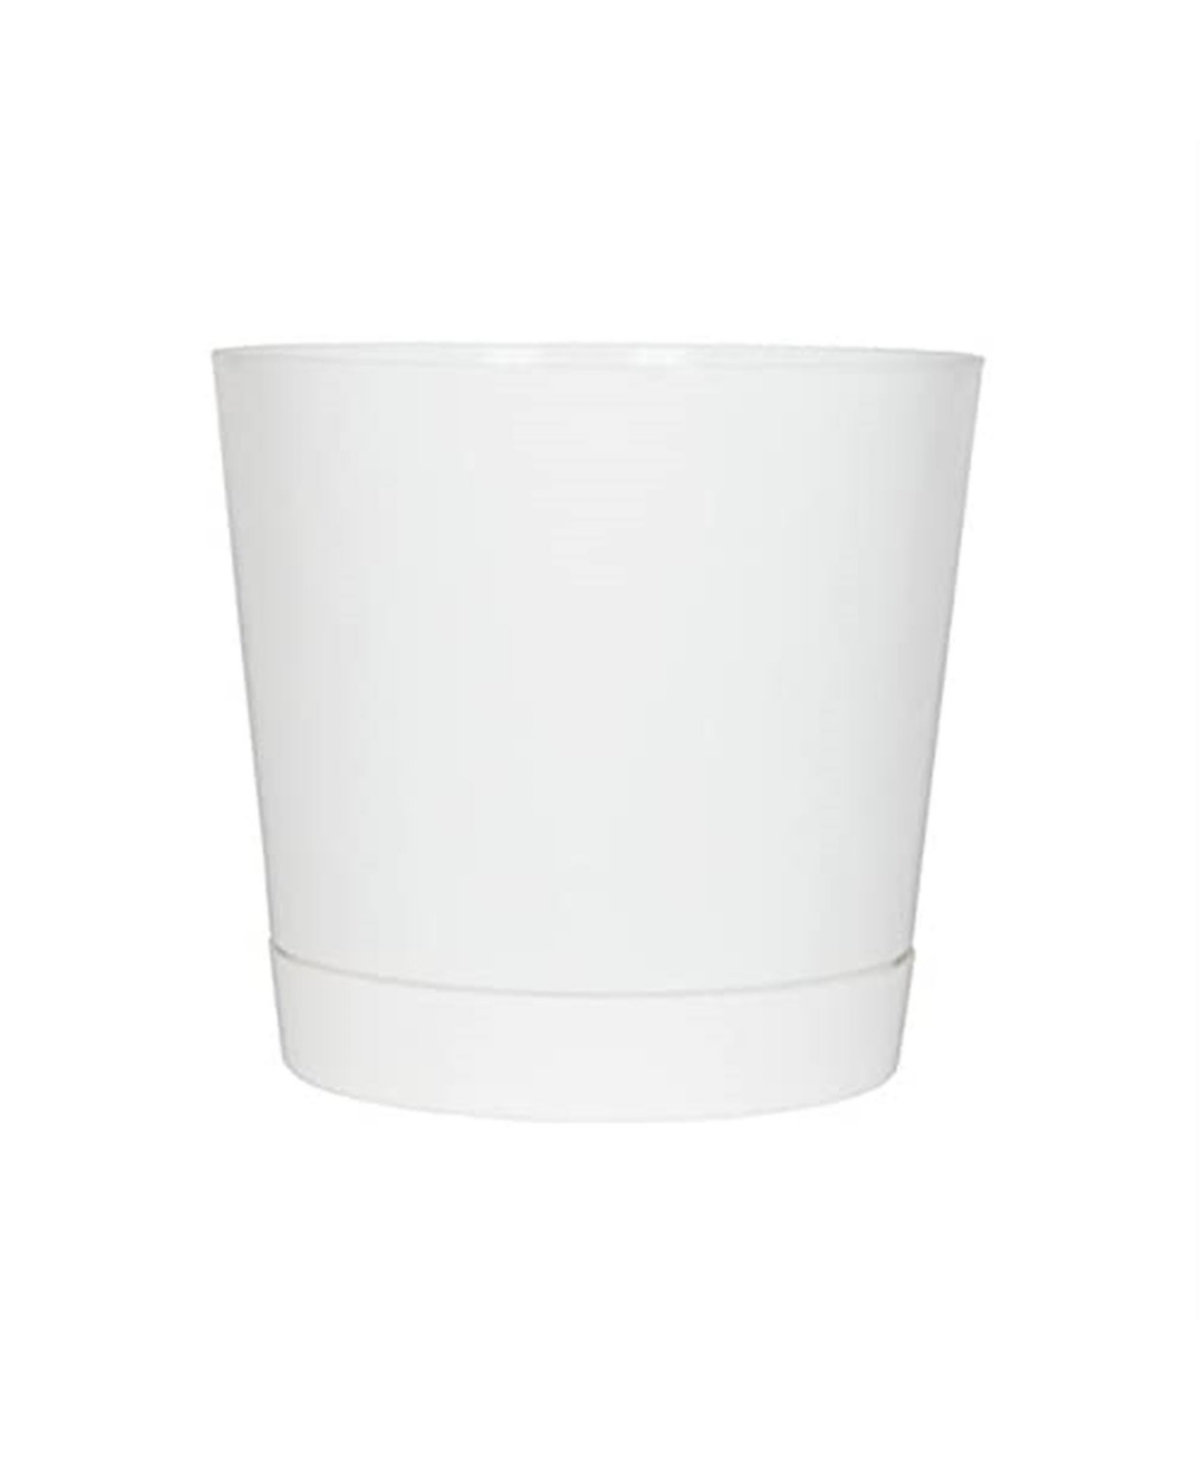 Full Depth Cylinder Pot, White, 10 Inch - White